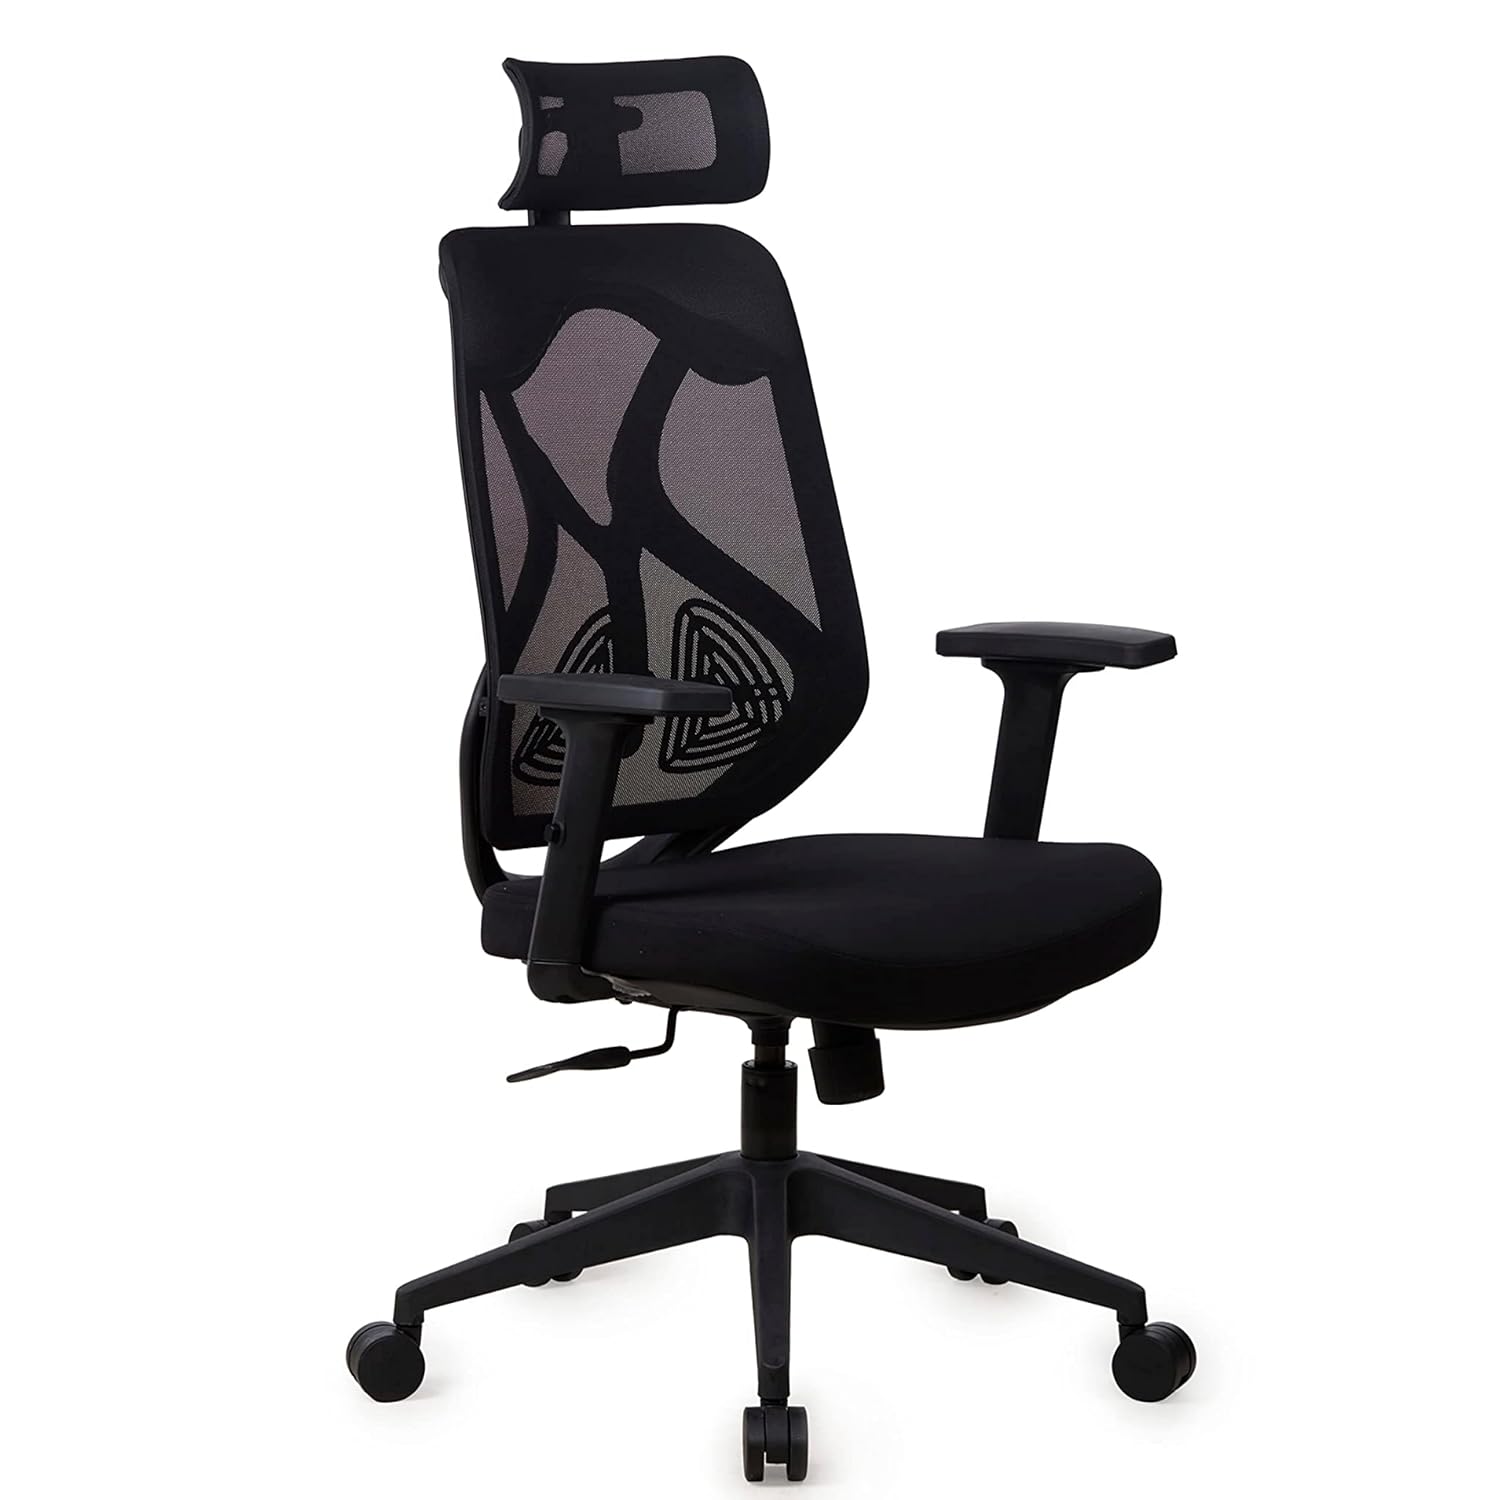 JD9 High Back Ergonomic office chair